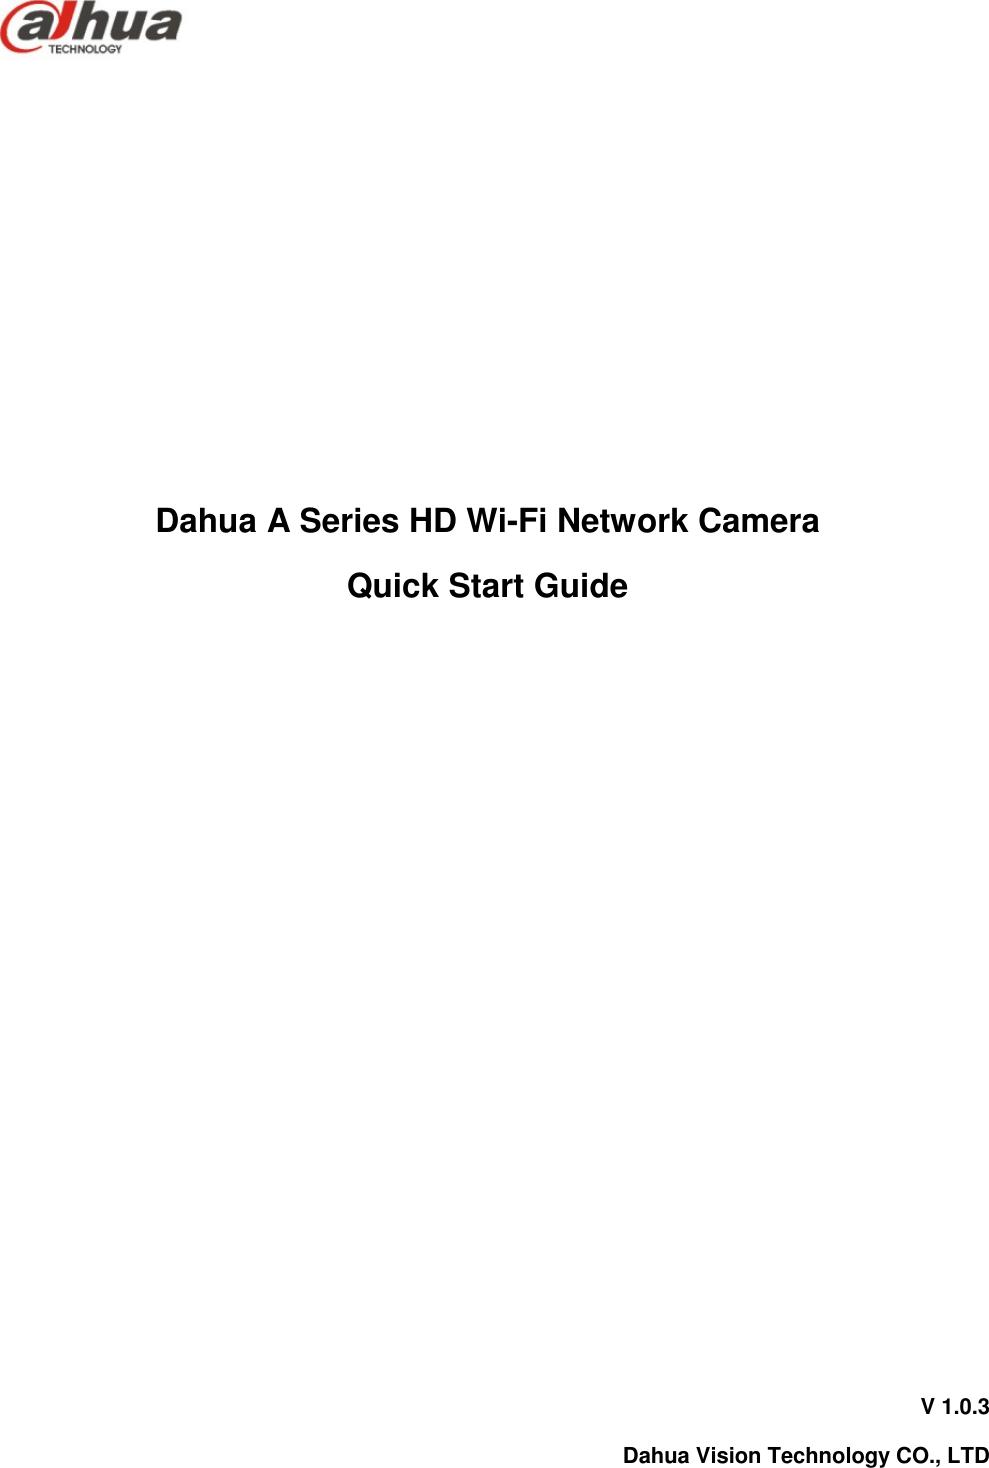          Dahua A Series HD Wi-Fi Network Camera  Quick Start Guide             V 1.0.3 Dahua Vision Technology CO., LTD 